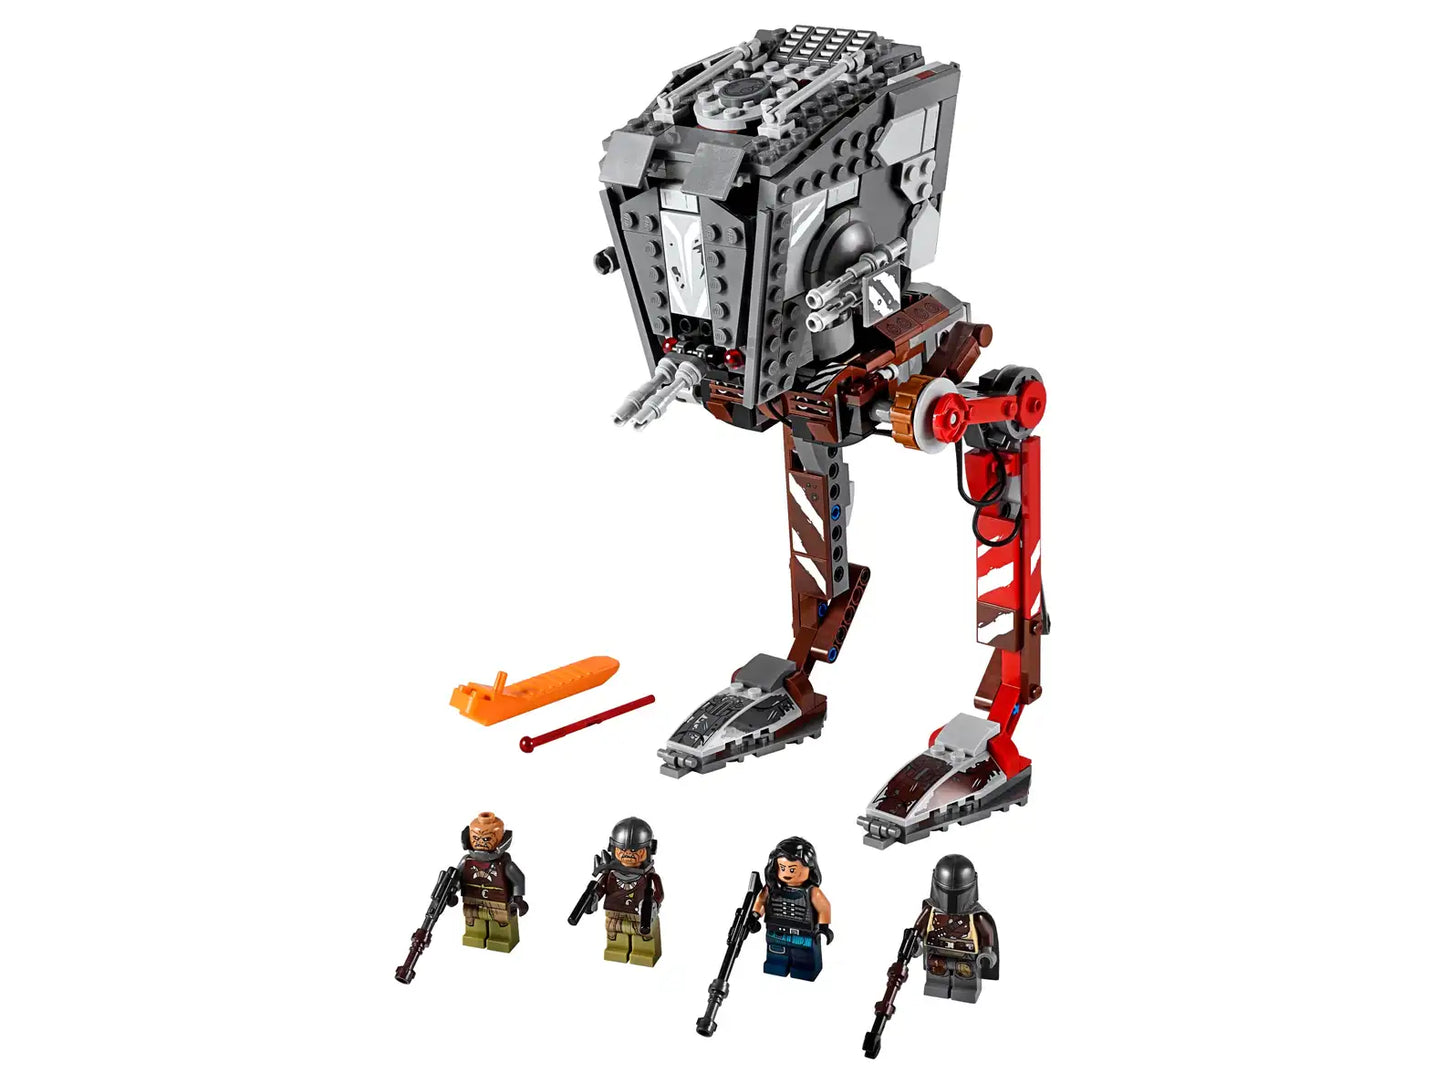 Lego - Star Wars AT ST Raider 75254